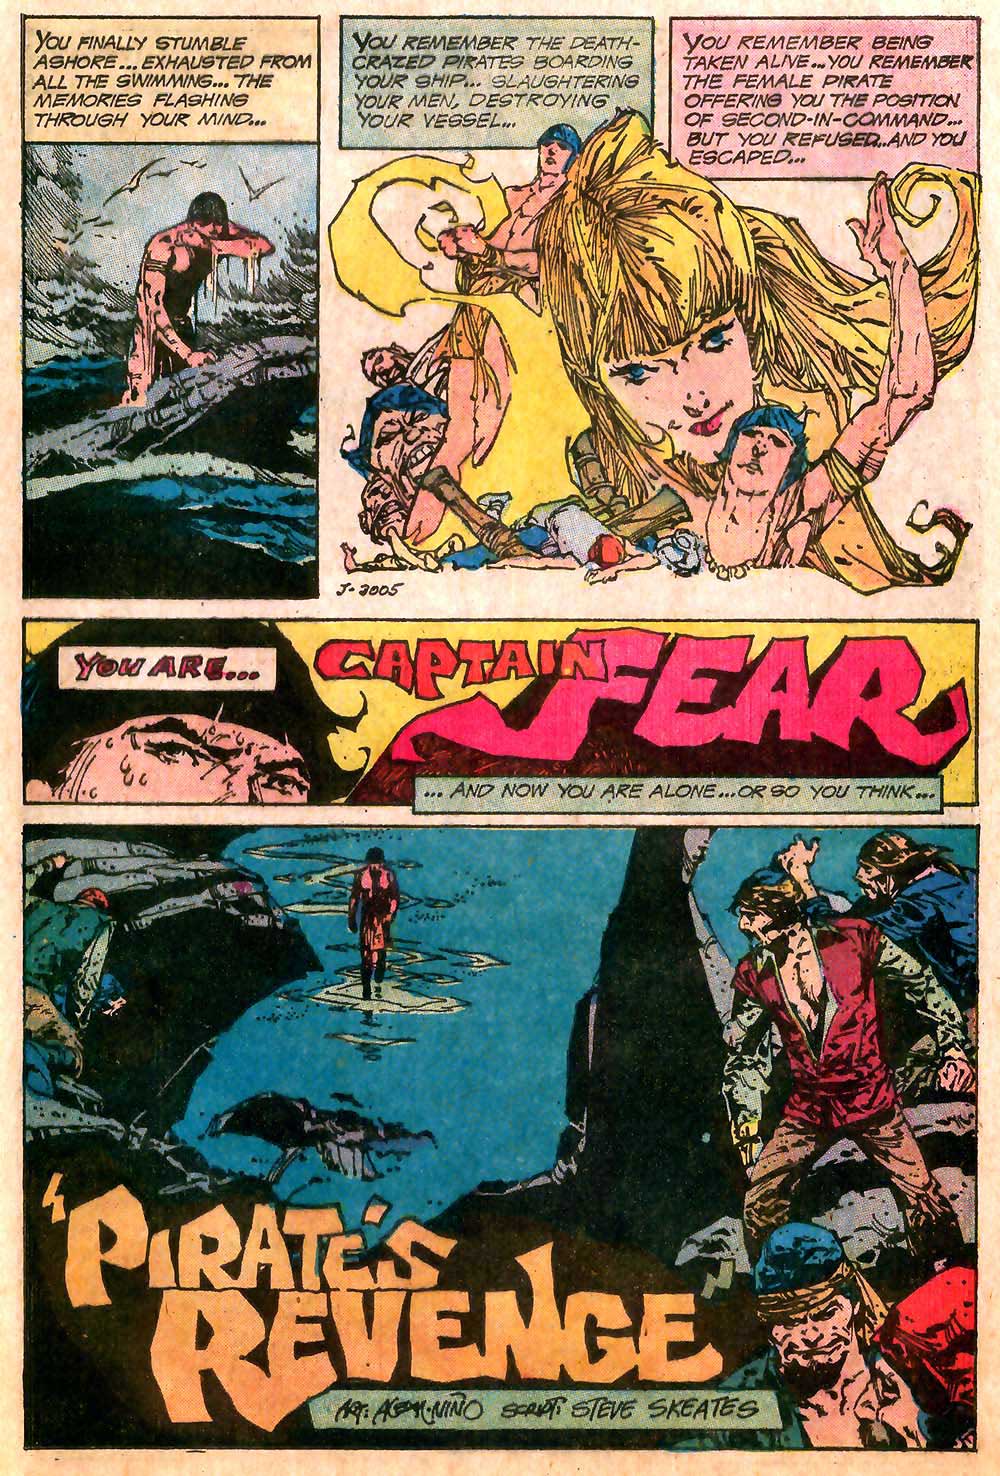 Adventure Comics #429 (1973) by Steve Skeates and Alex Nino